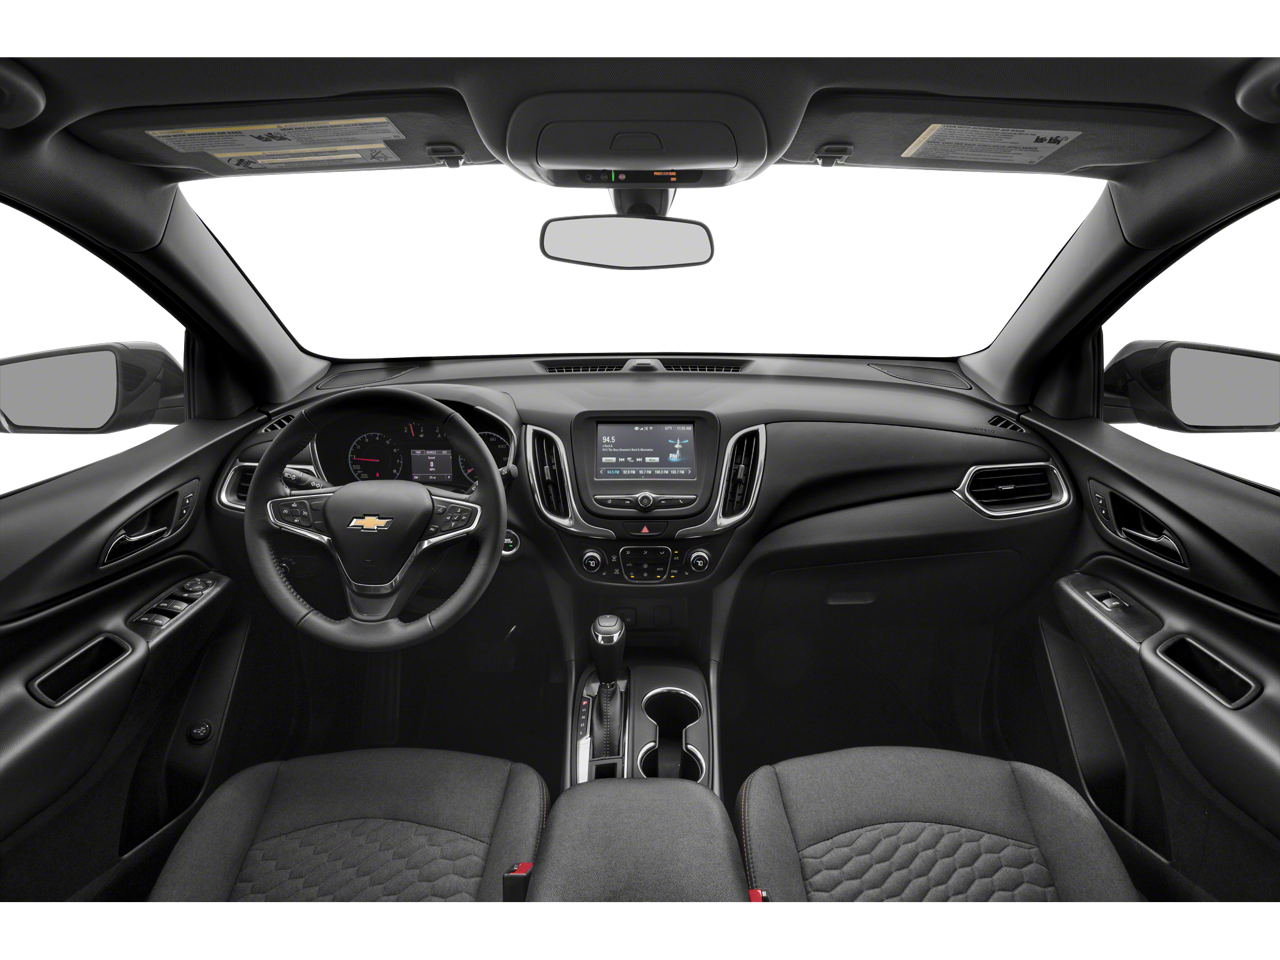 2020 Chevrolet Equinox LT 1LT w/ Confidence & Convenience